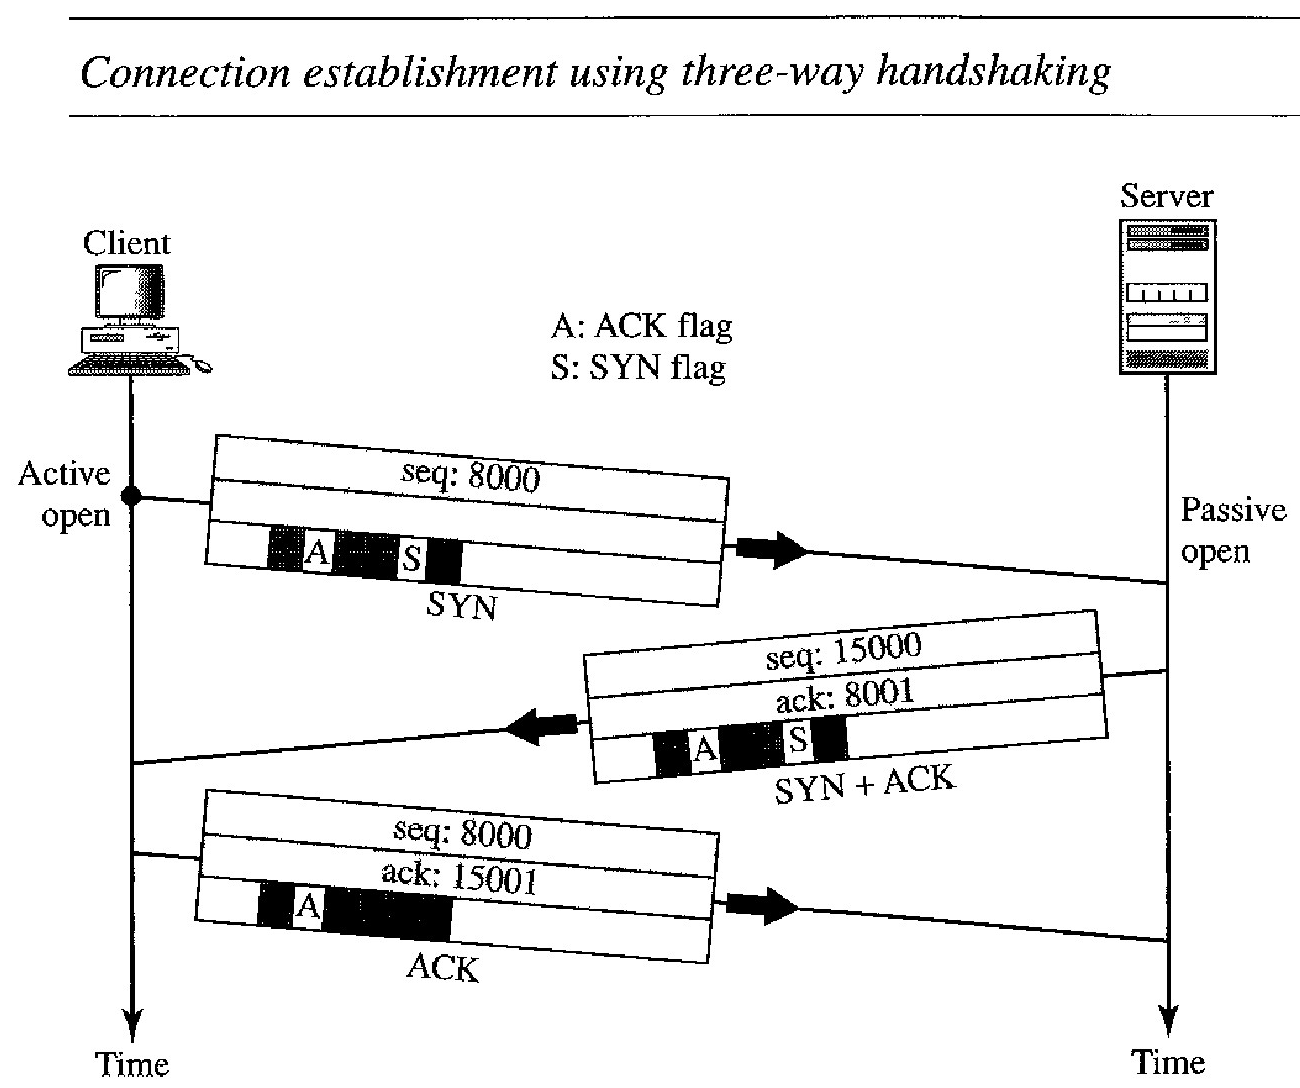 Connection establishment using three-way handshaking